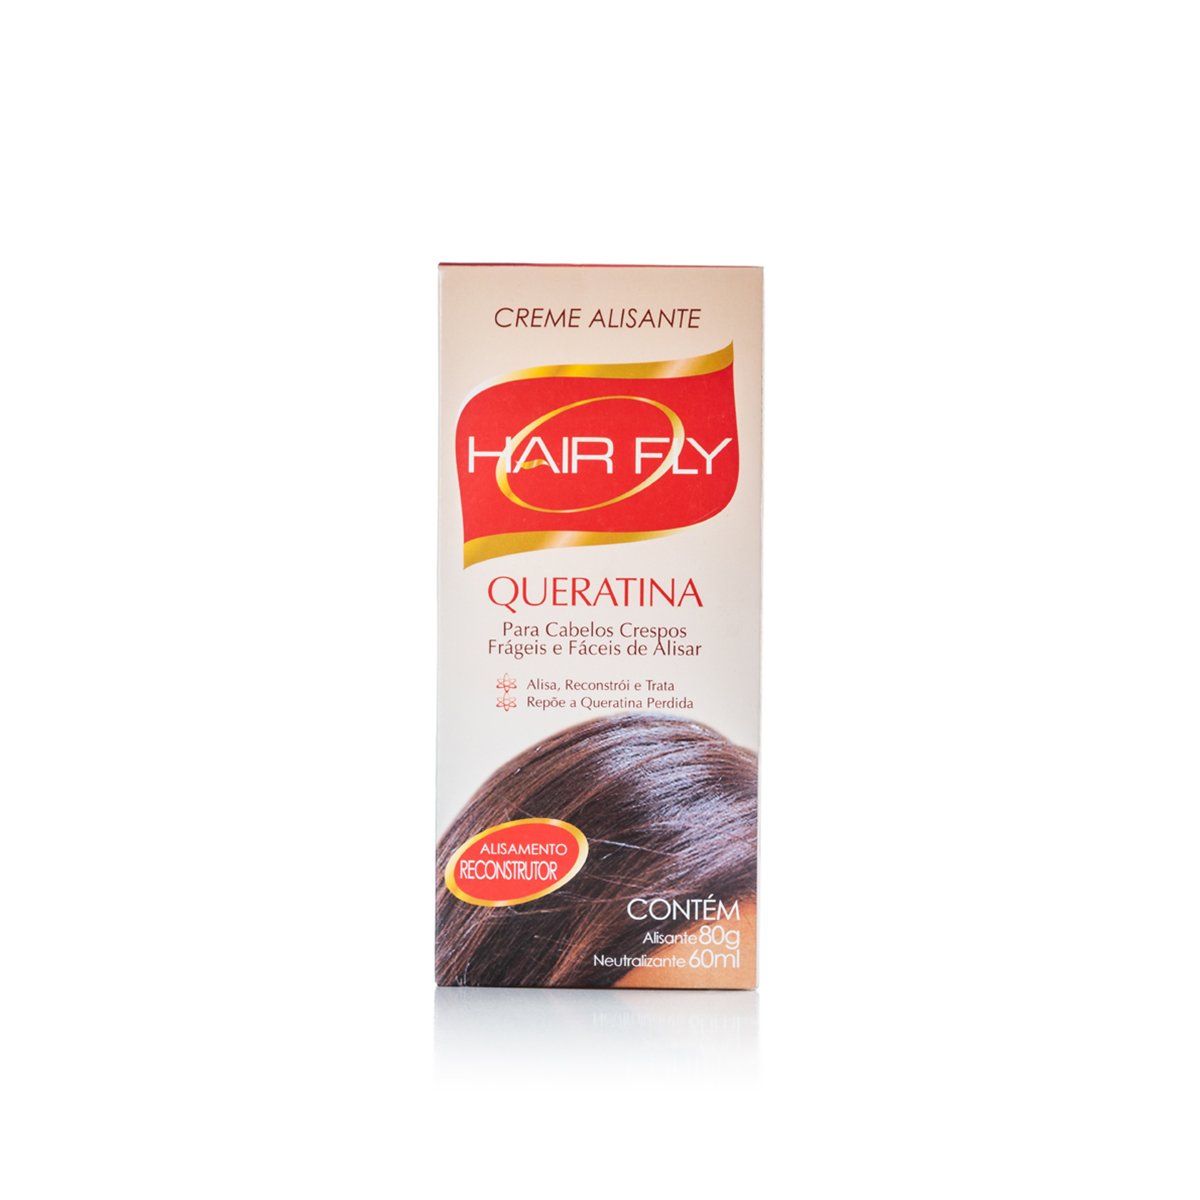 Hair Fly Hair Permanents & Straighteners Hair Fly Cream Alisante Hair Fly Keratina 80g